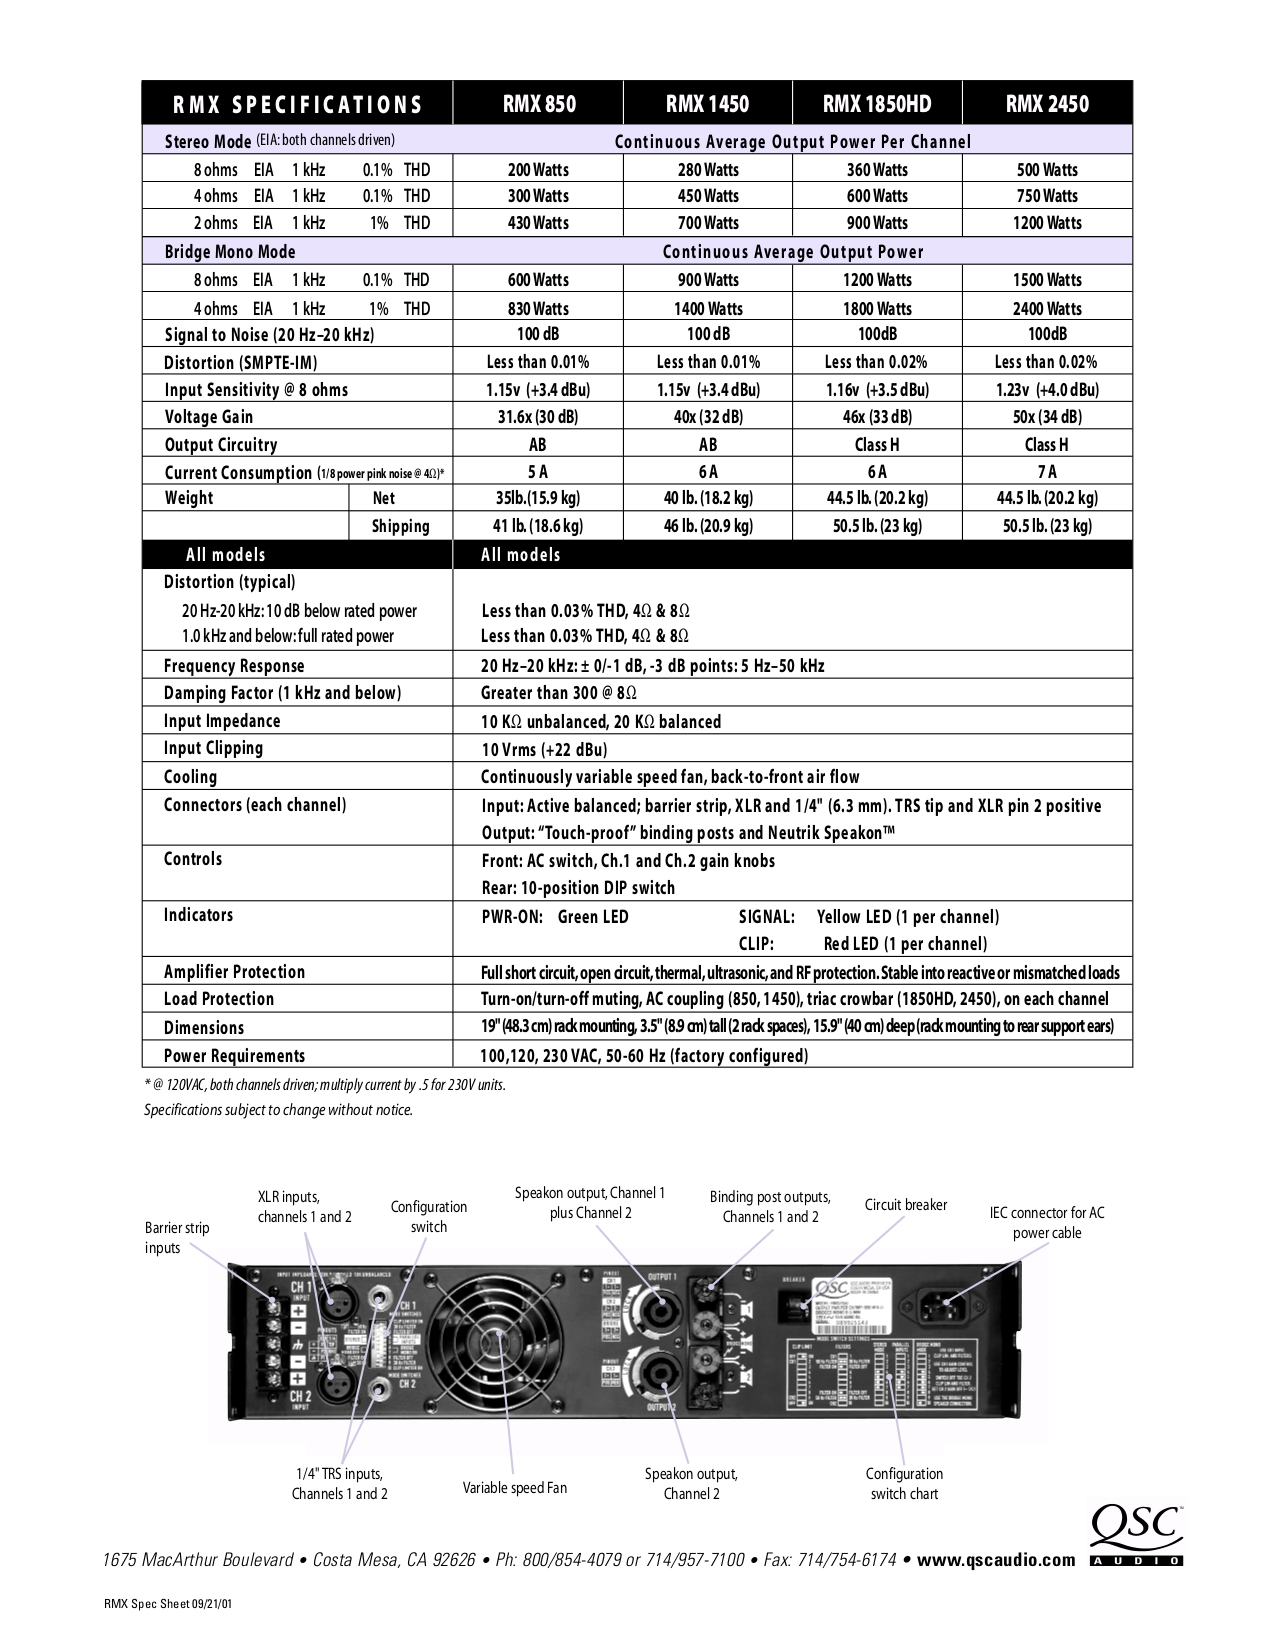 Qsc rmx 2450 manual pdf